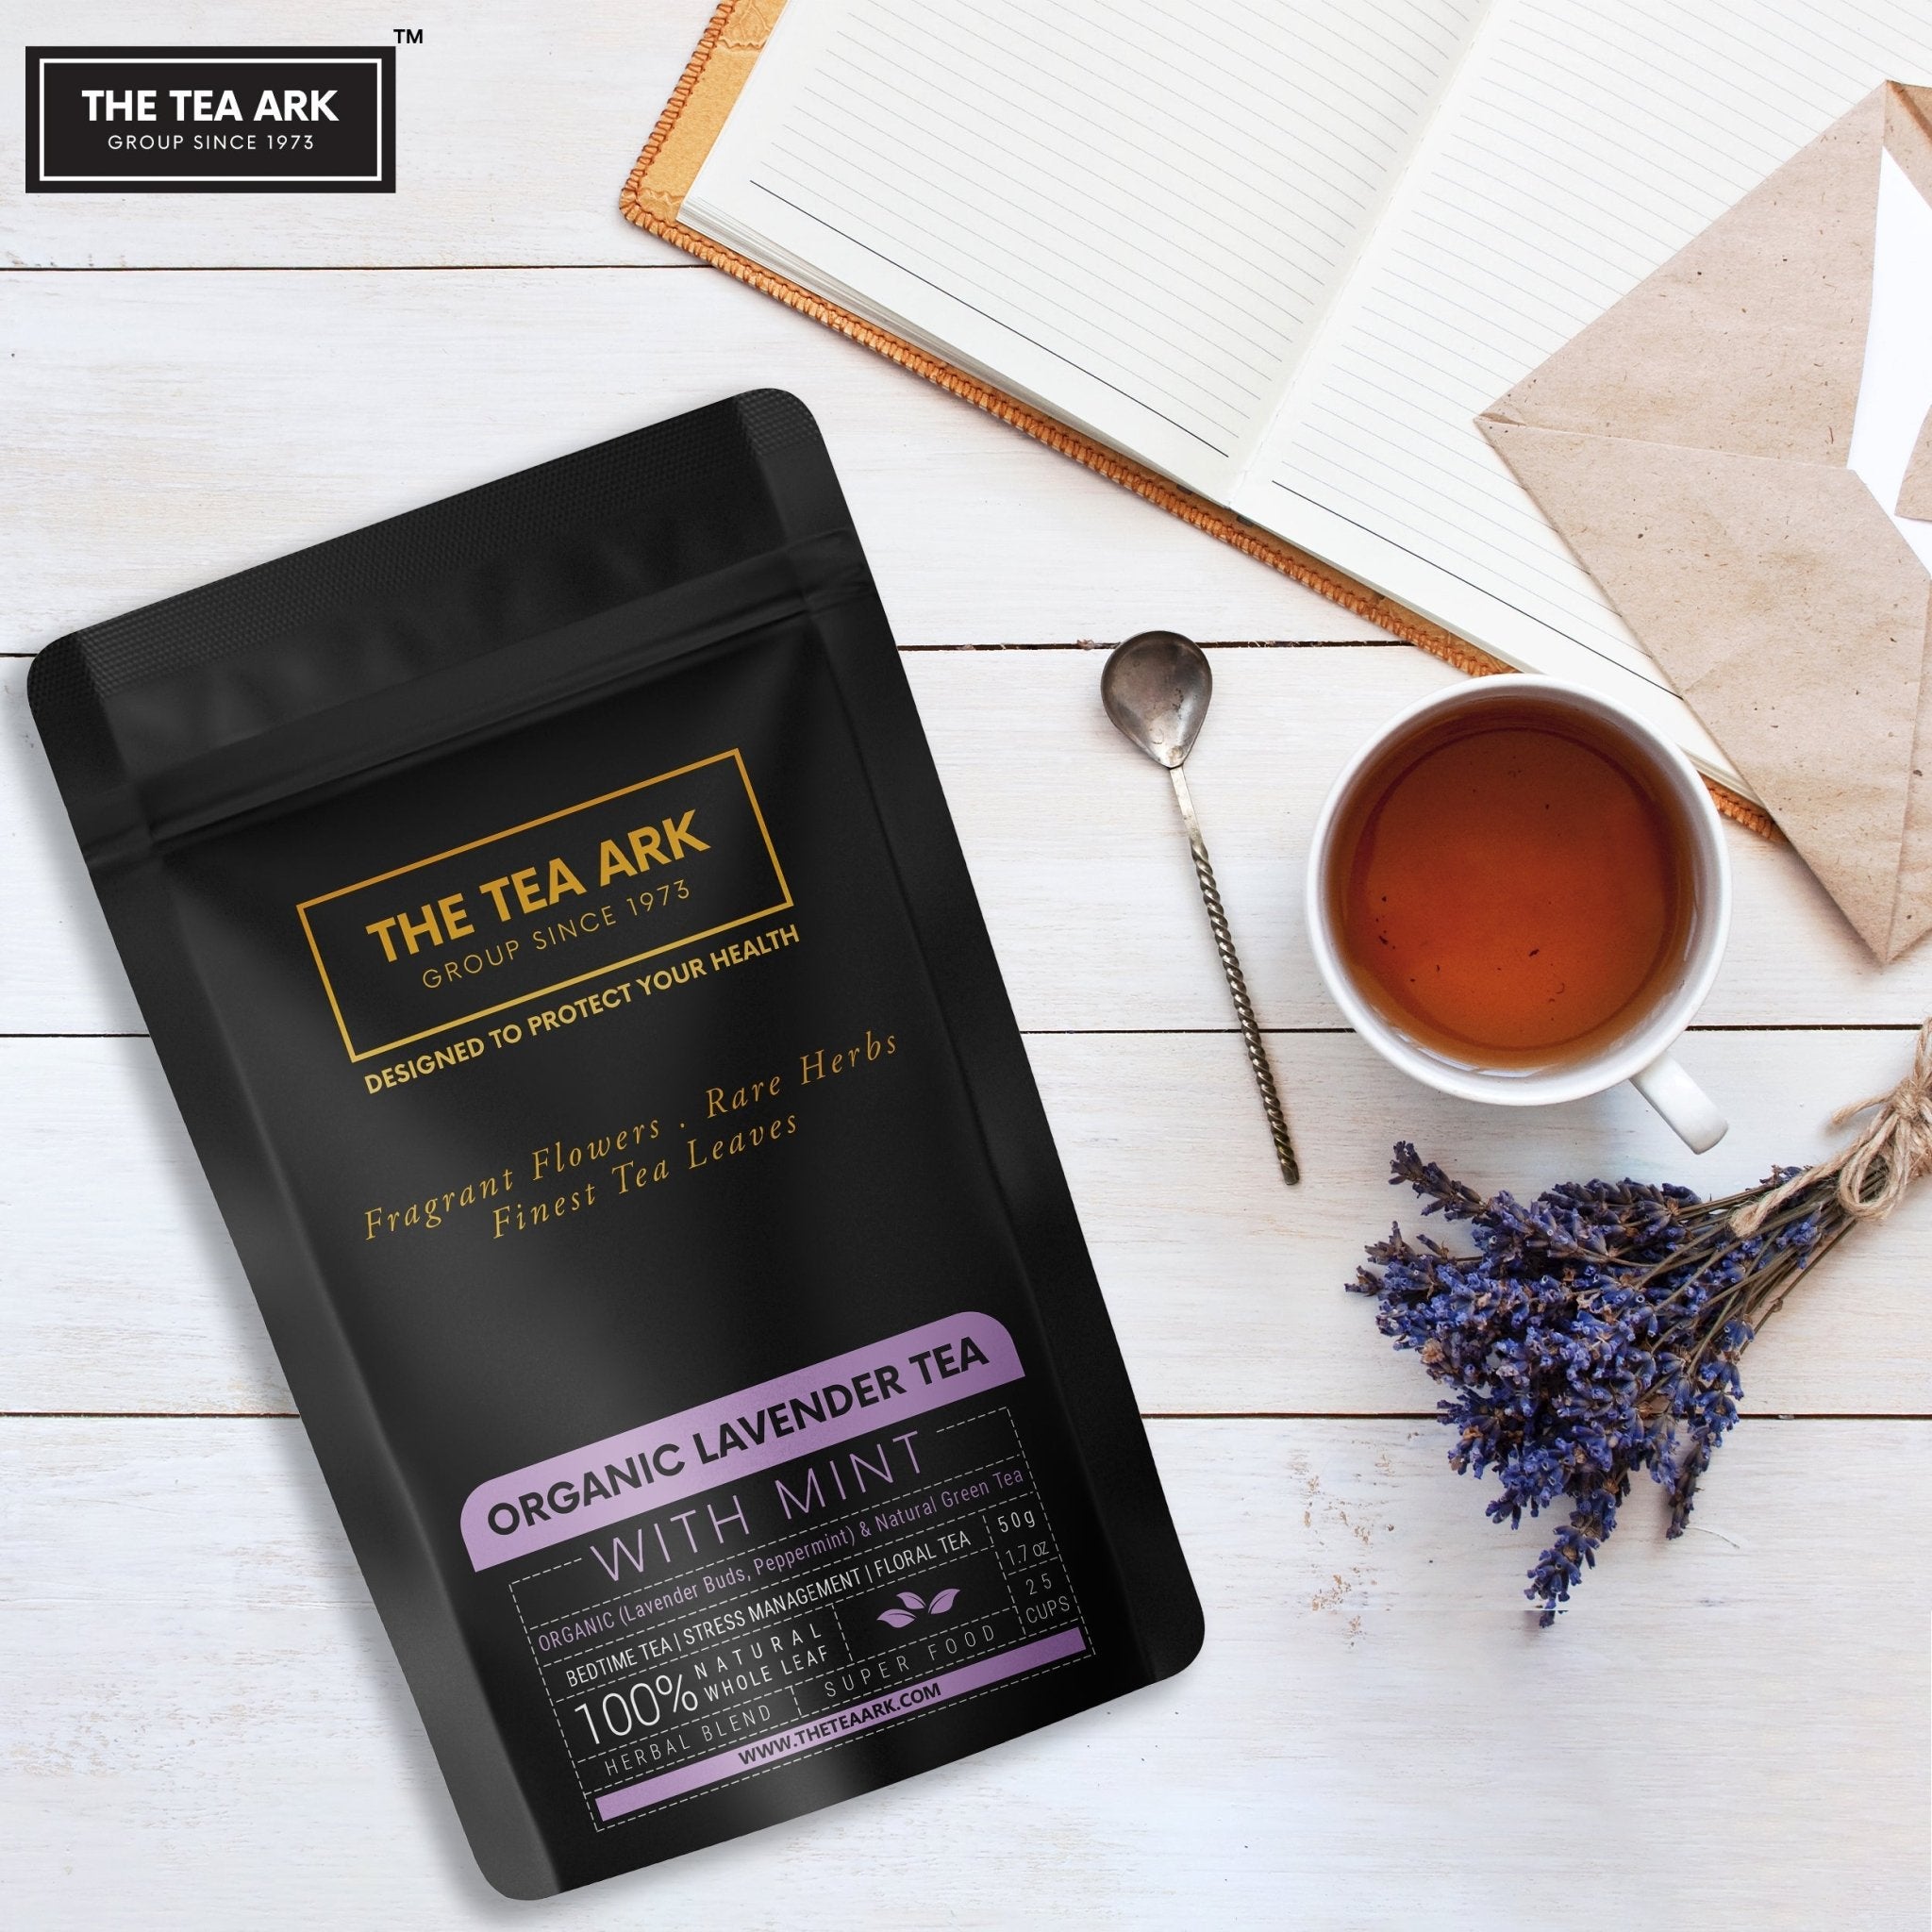 The Tea Ark Lavender Peppermint Green Tea, Bedtime Tea for Sleep & Stress Management - Inlife Pharma Private Limited